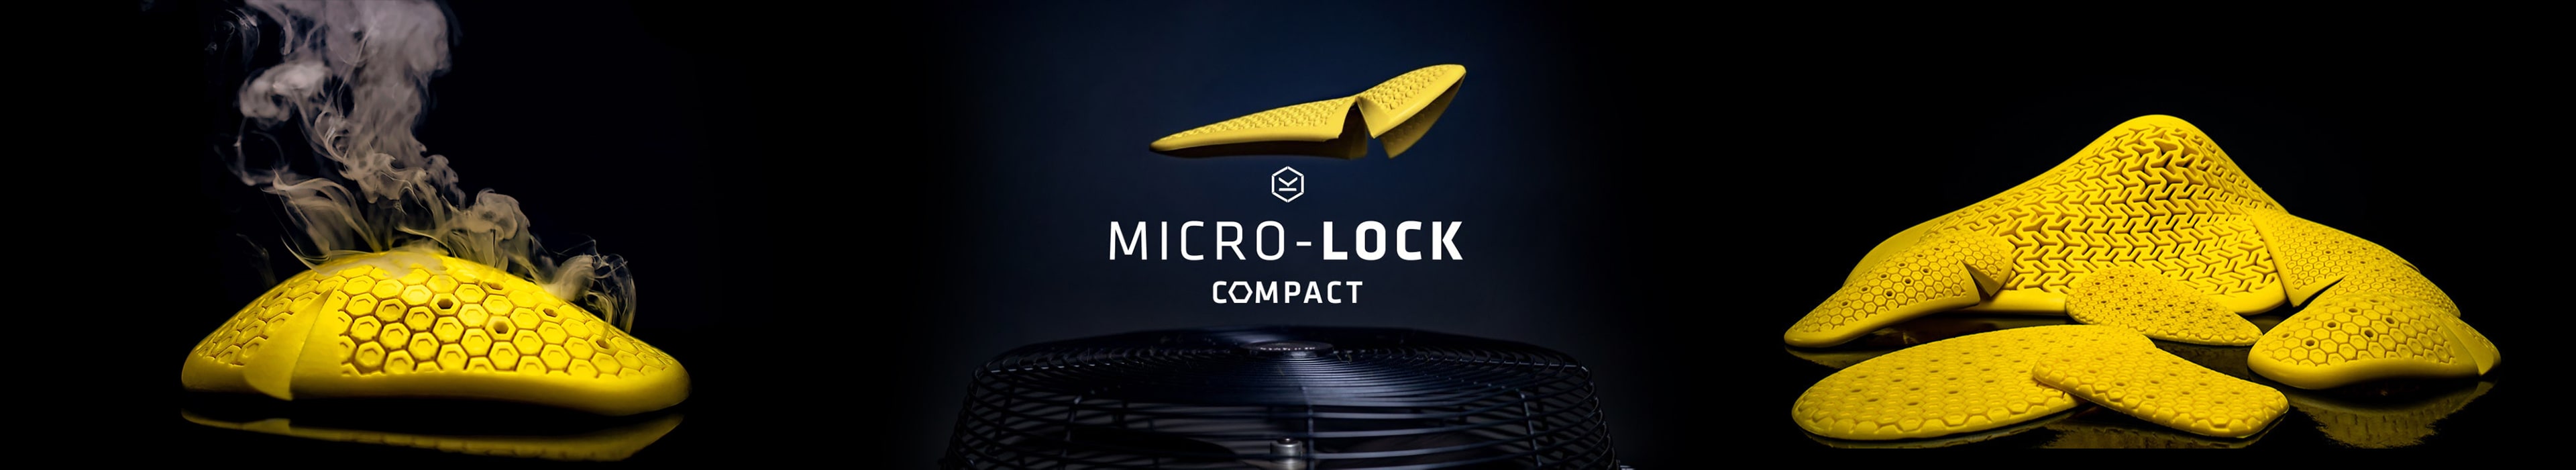 knox Microlock Compact-min.jpg (229 KB)